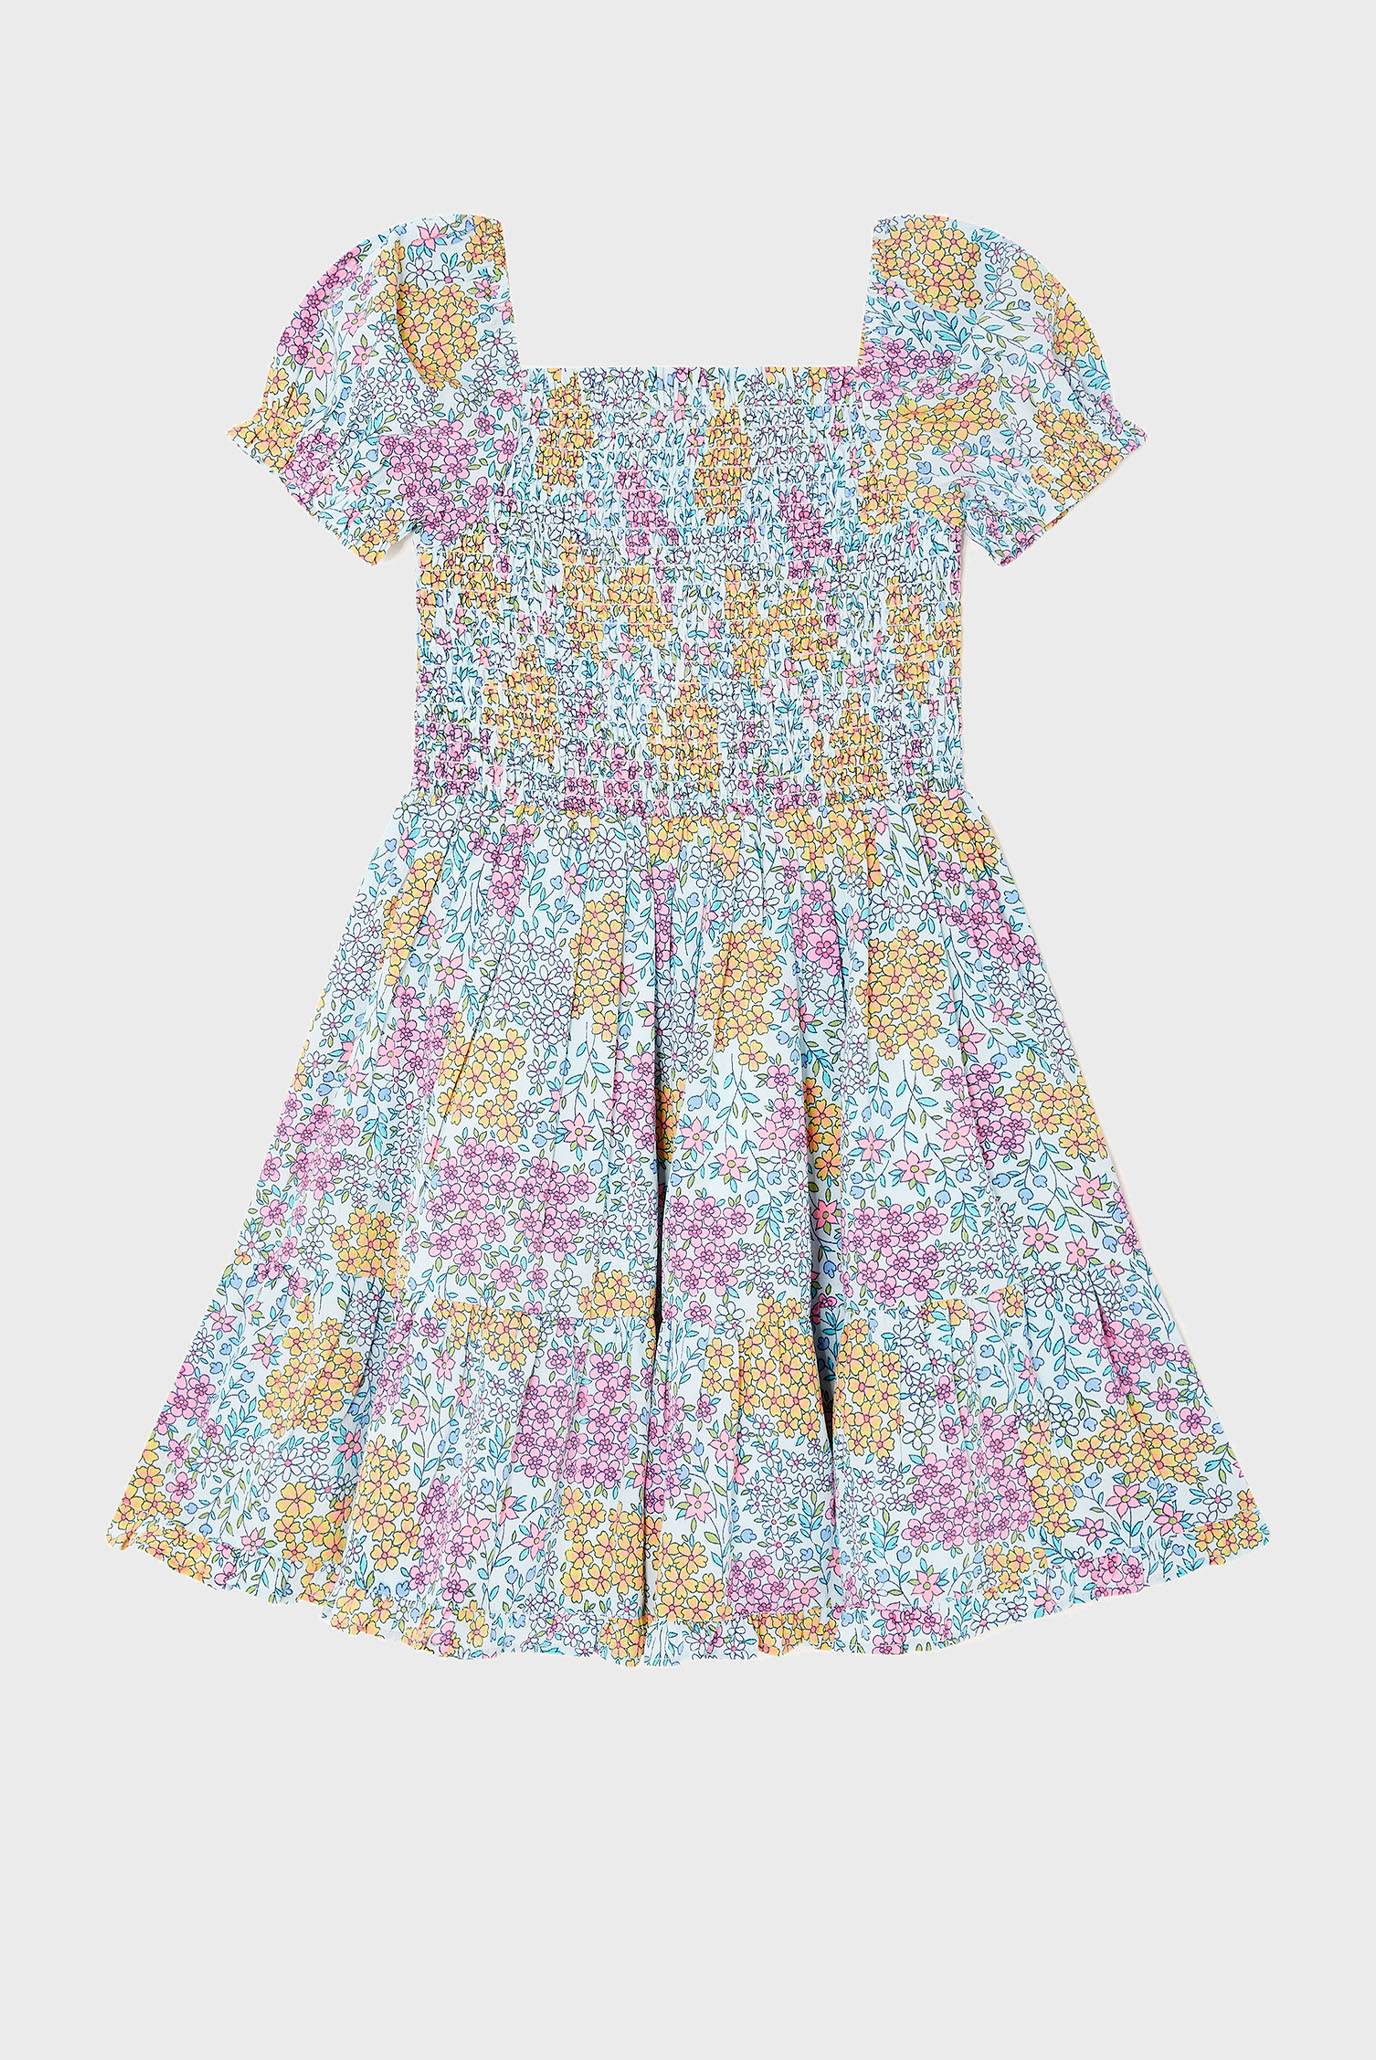 Дитяча сукня з візерунком PATCHY FLORAL 1